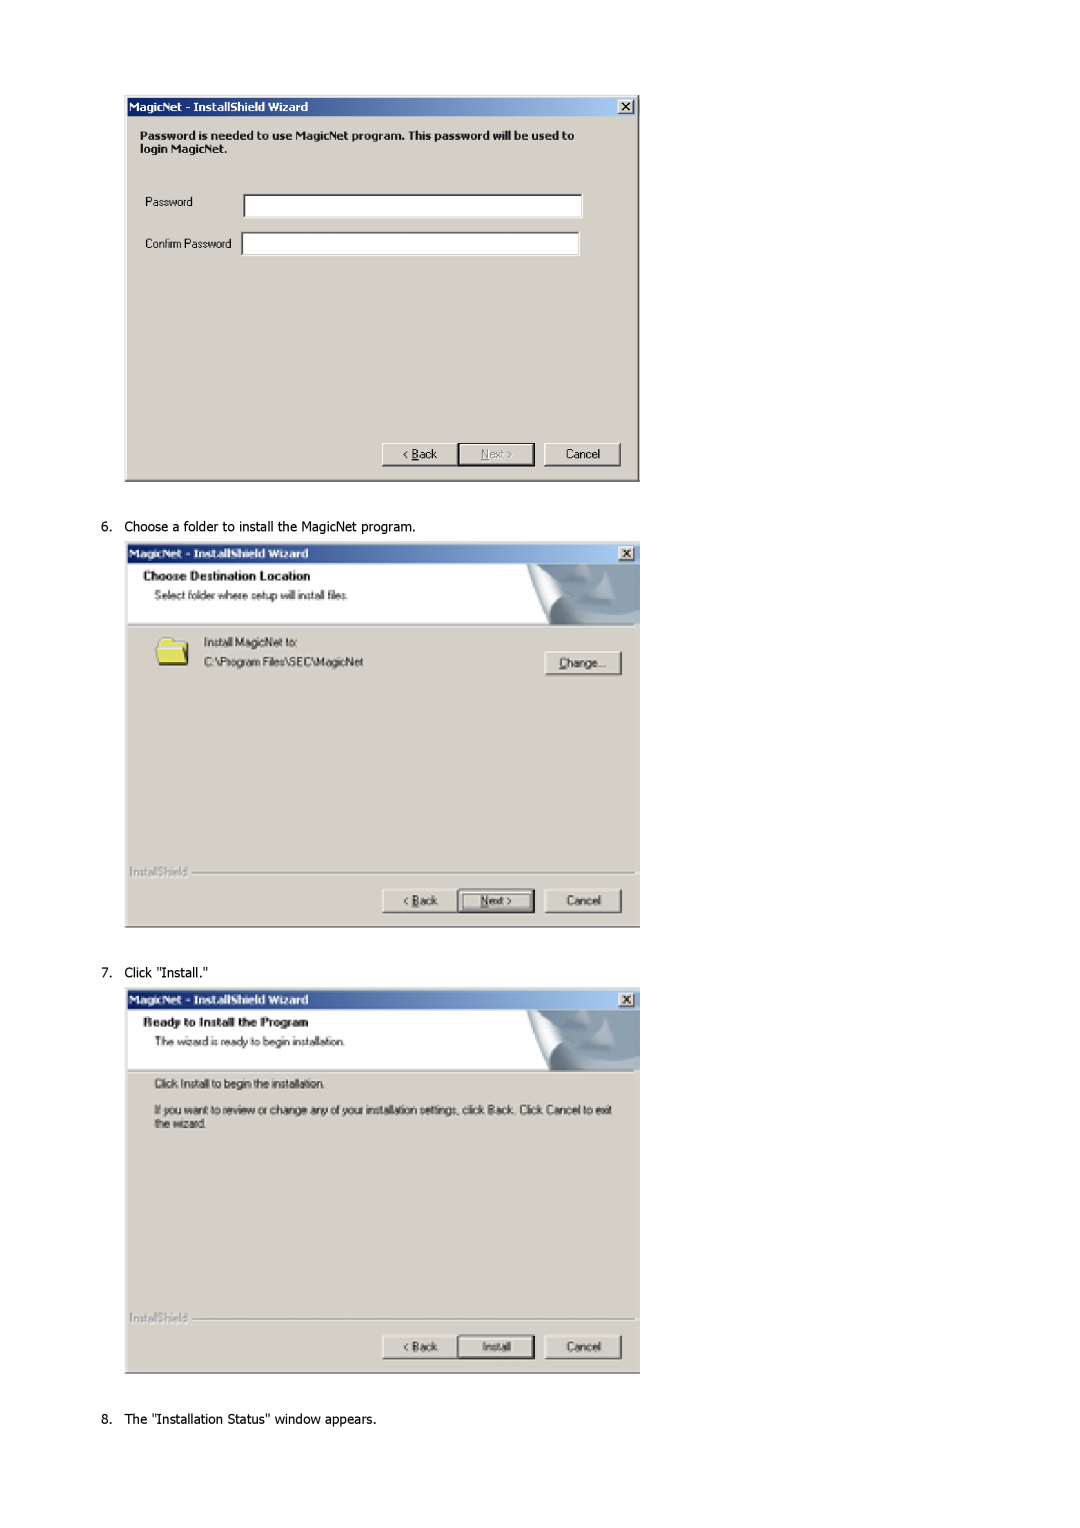 Samsung 400Pn, 400P manual Choose a folder to install the MagicNet program 7. Click Install 